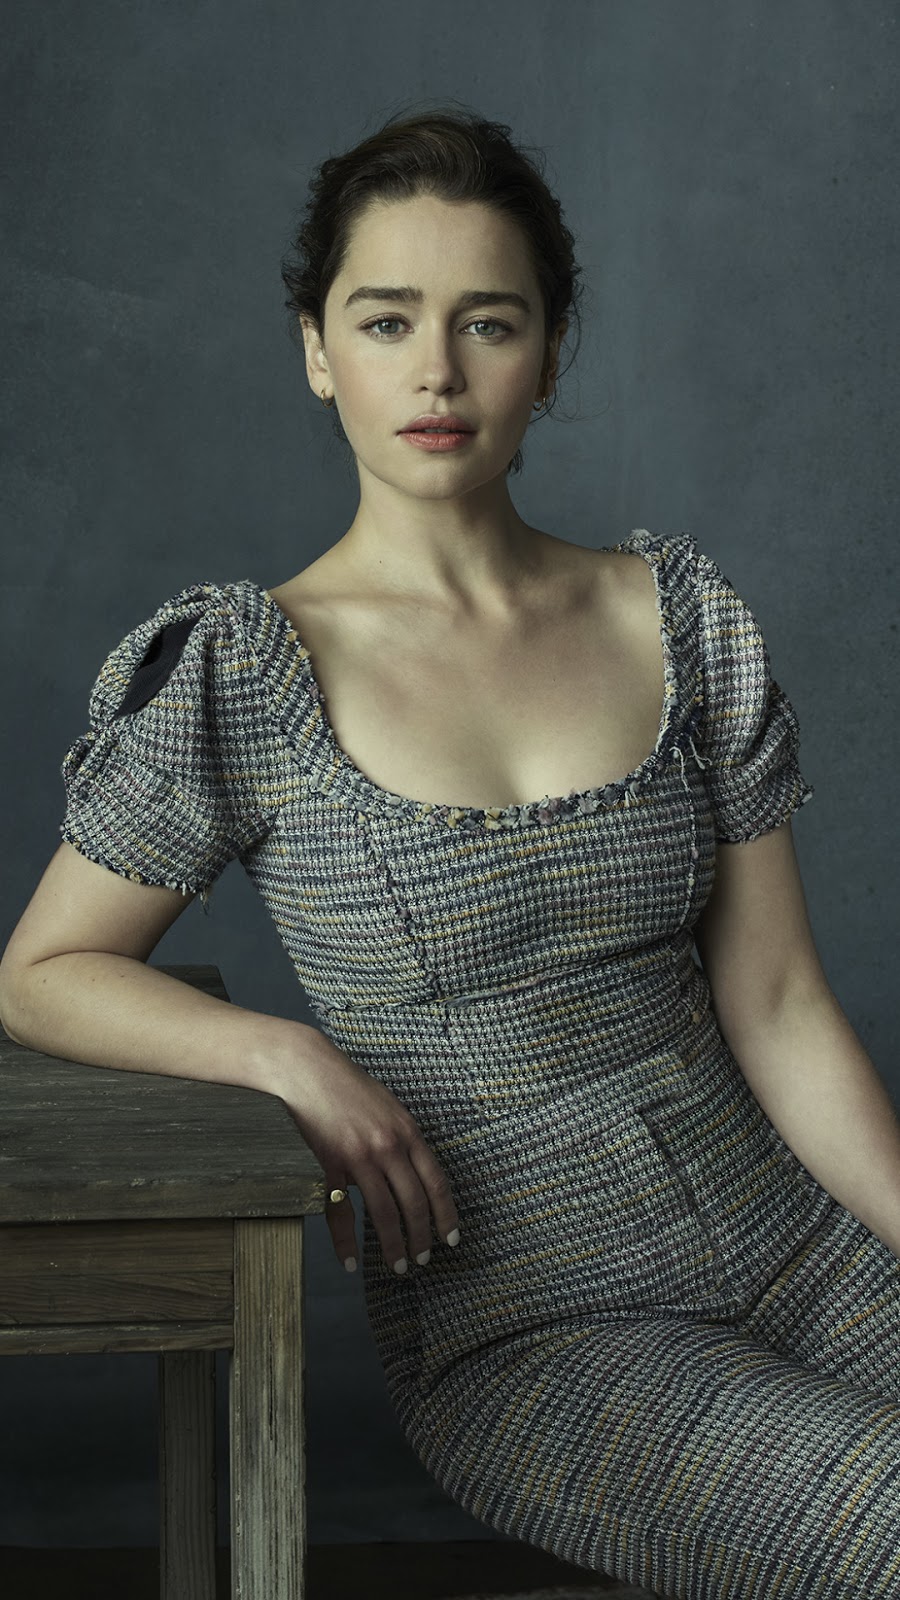 Emilia Clarke Wallpapers